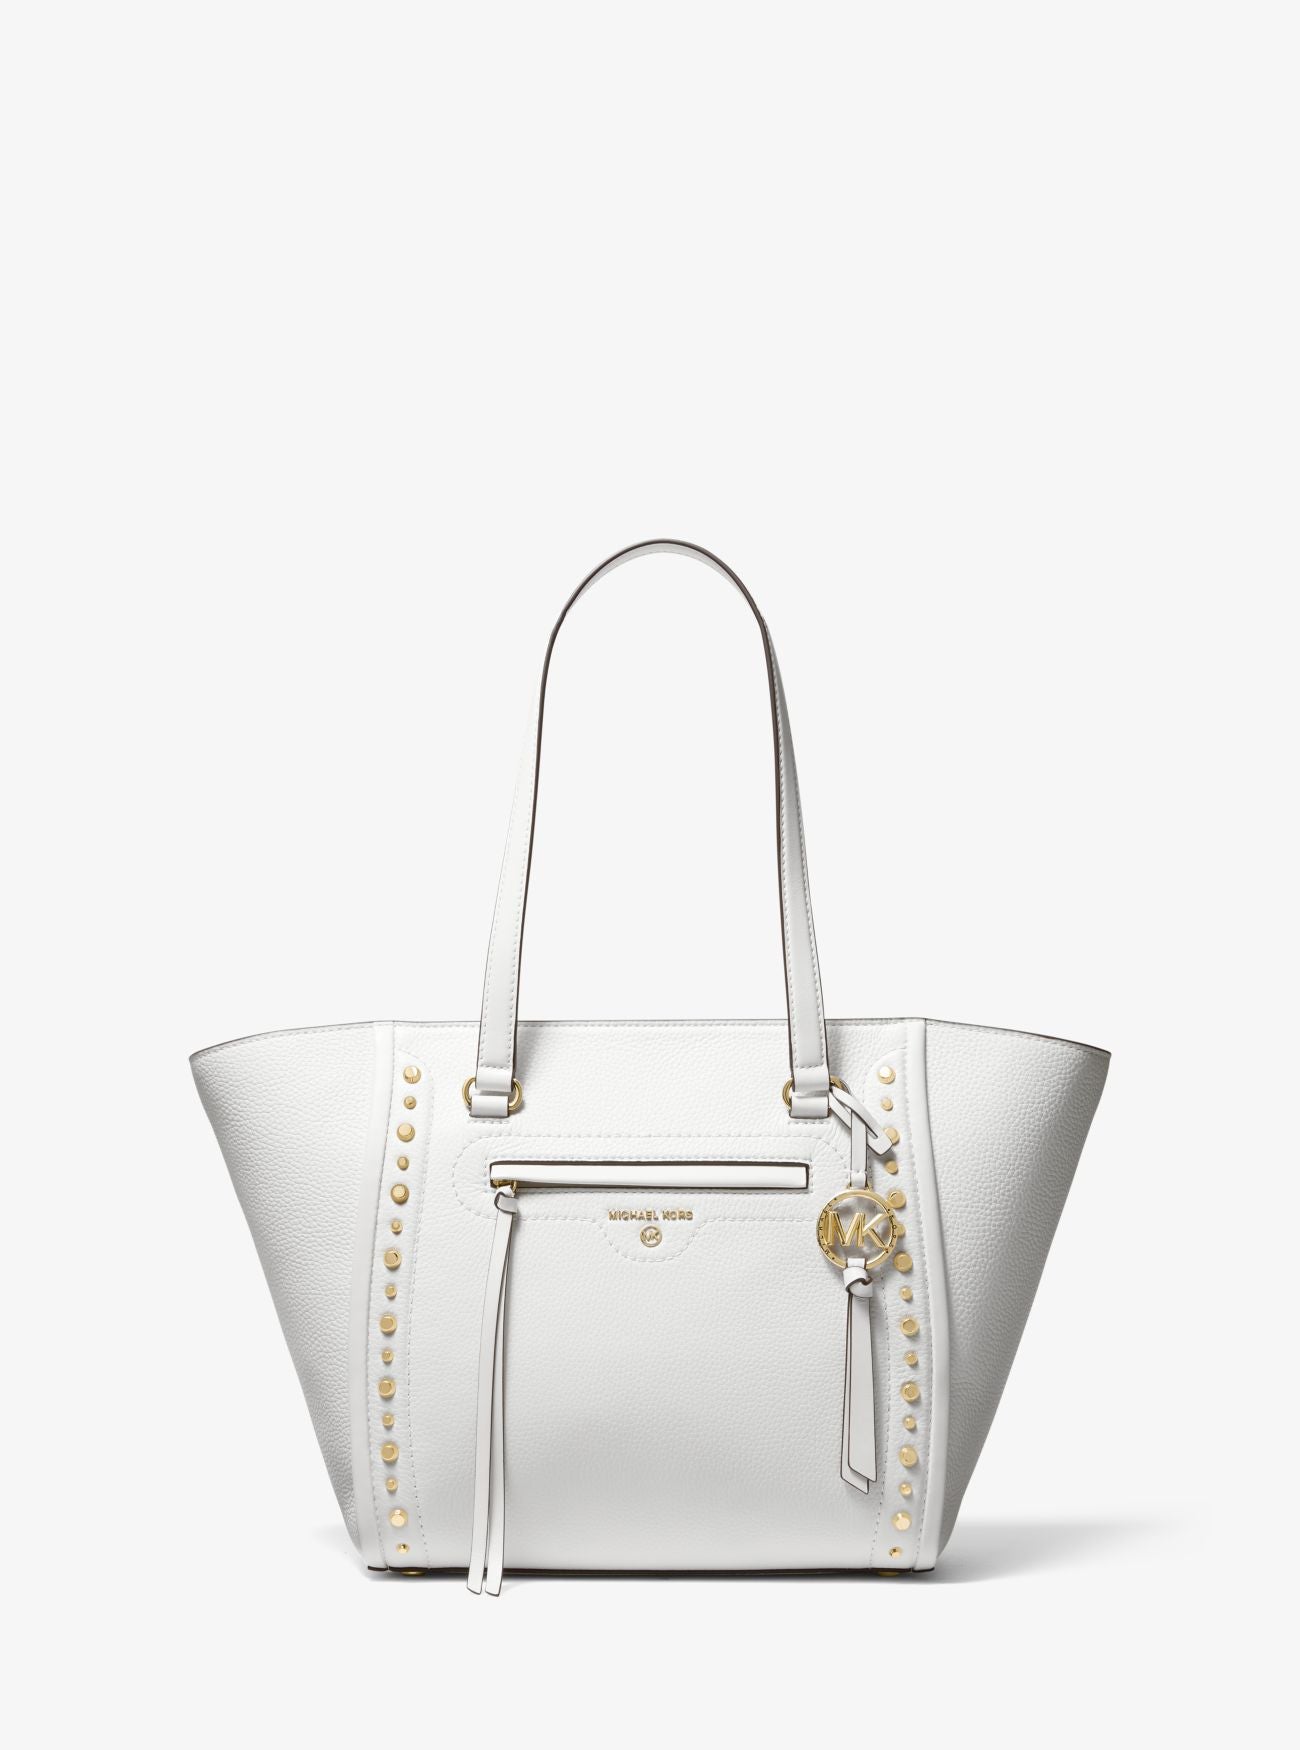 Michael Kors Gray Studded Bag | eBay